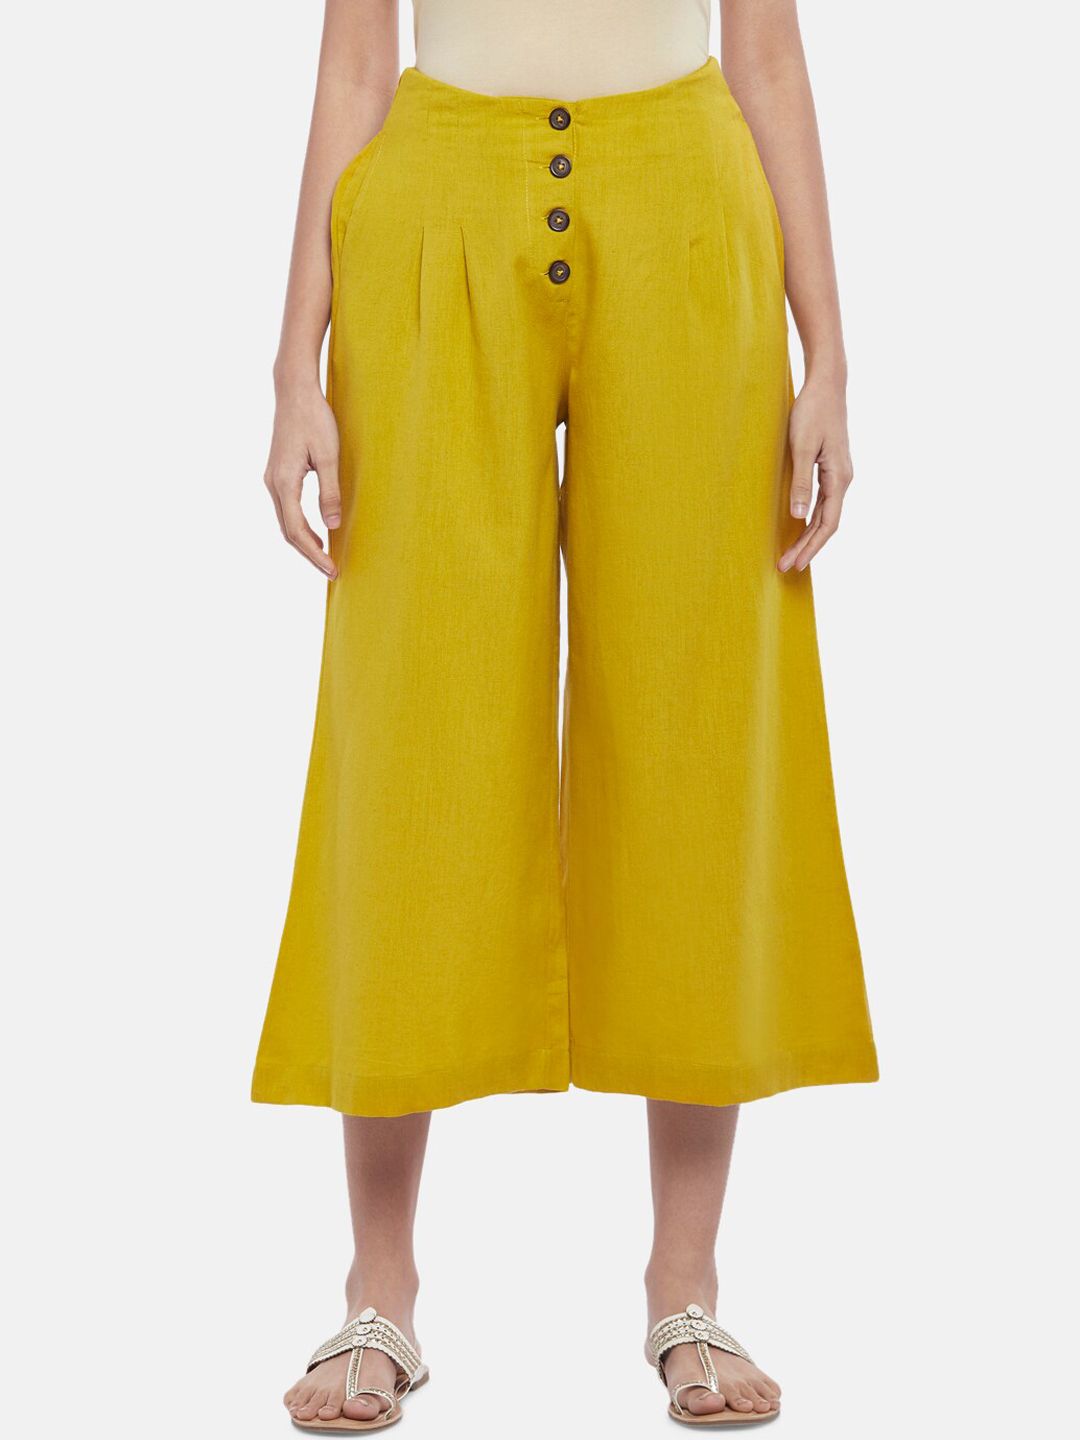 AKKRITI BY PANTALOONS Women Mustard Yellow Culottes Trousers Price in India